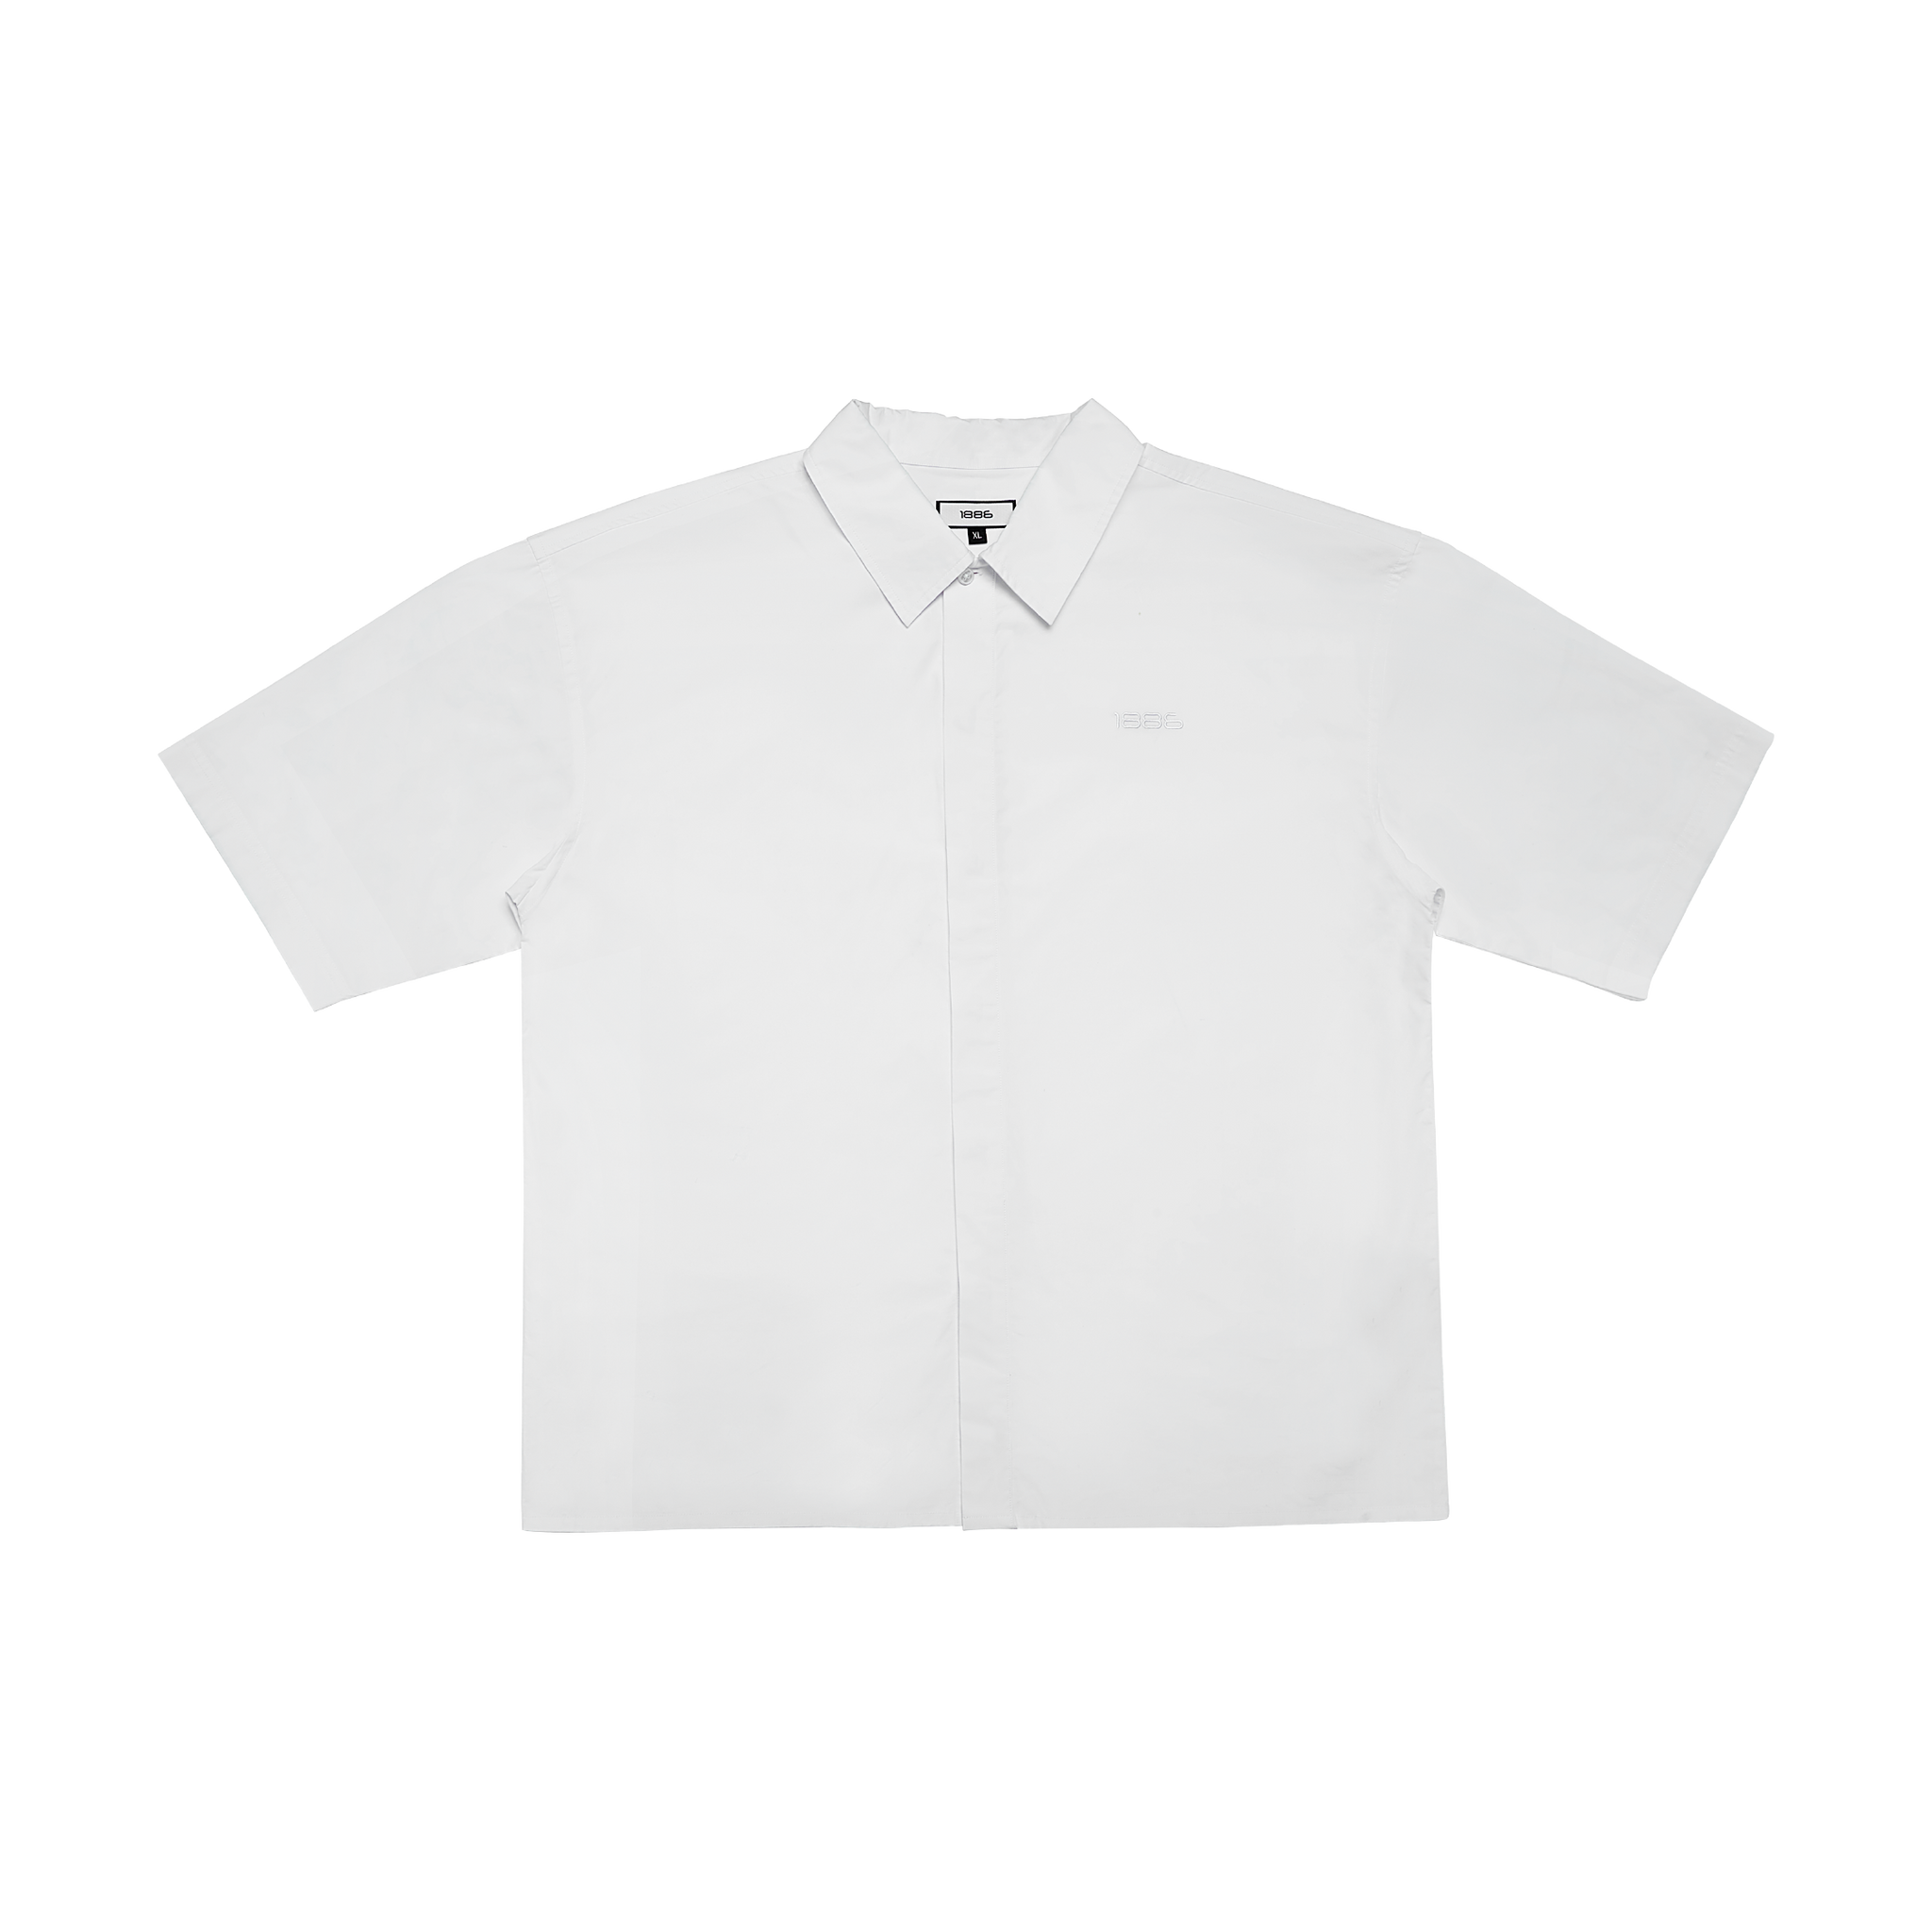 1886 White shirt